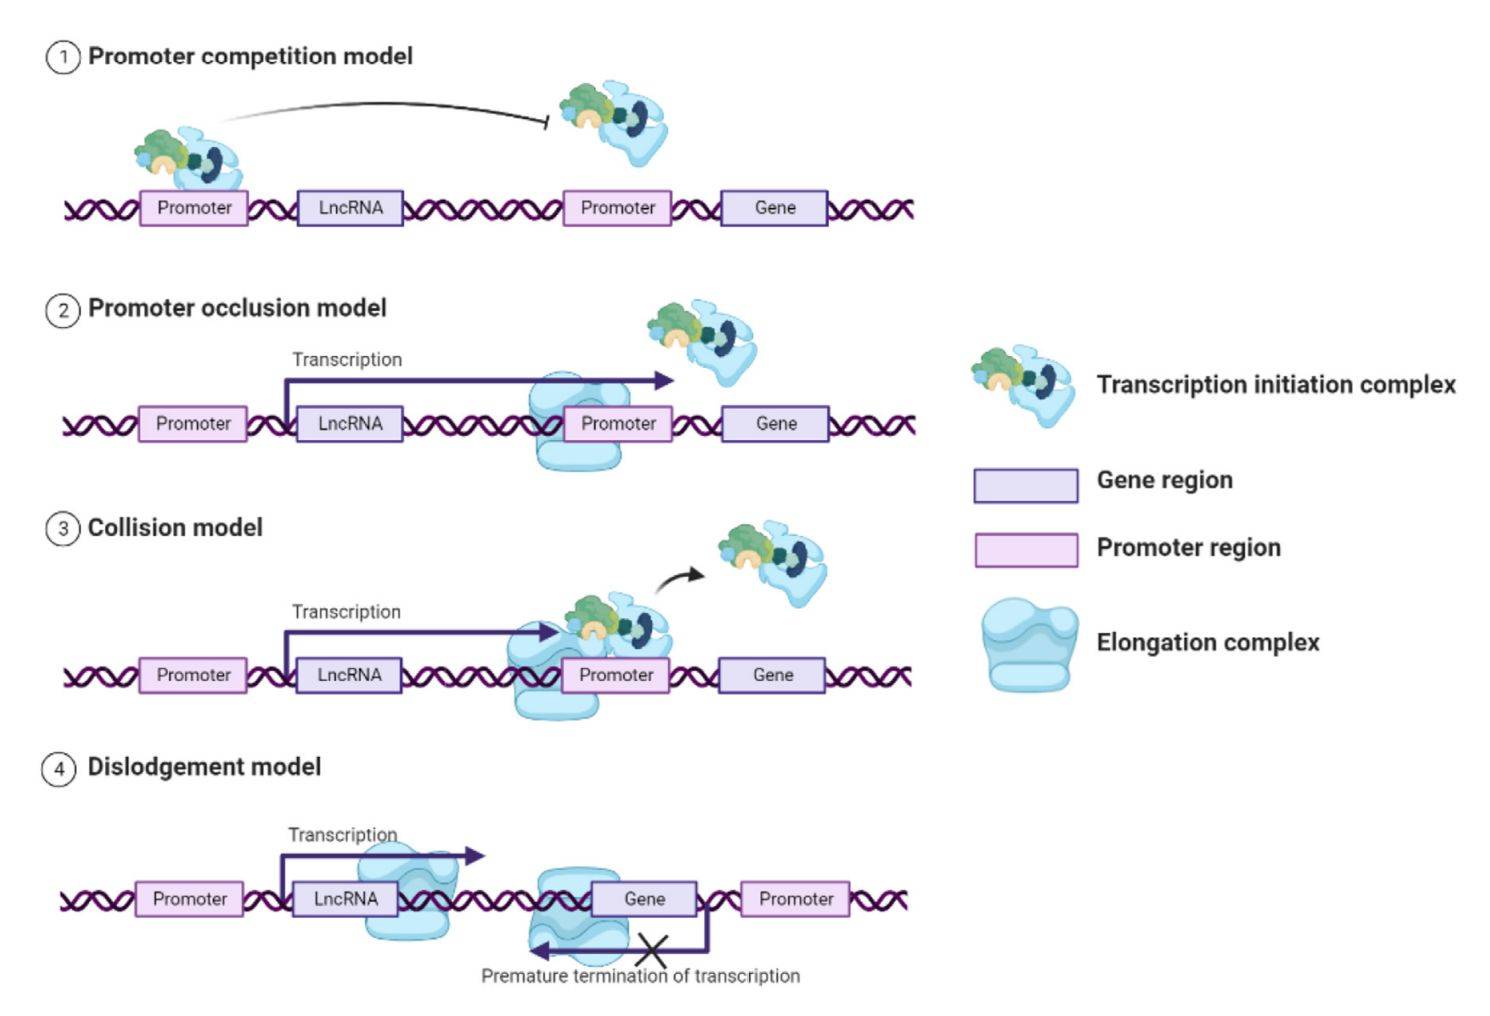 Figure 1. LncRNA inhibits gene transcription to achieve interference.